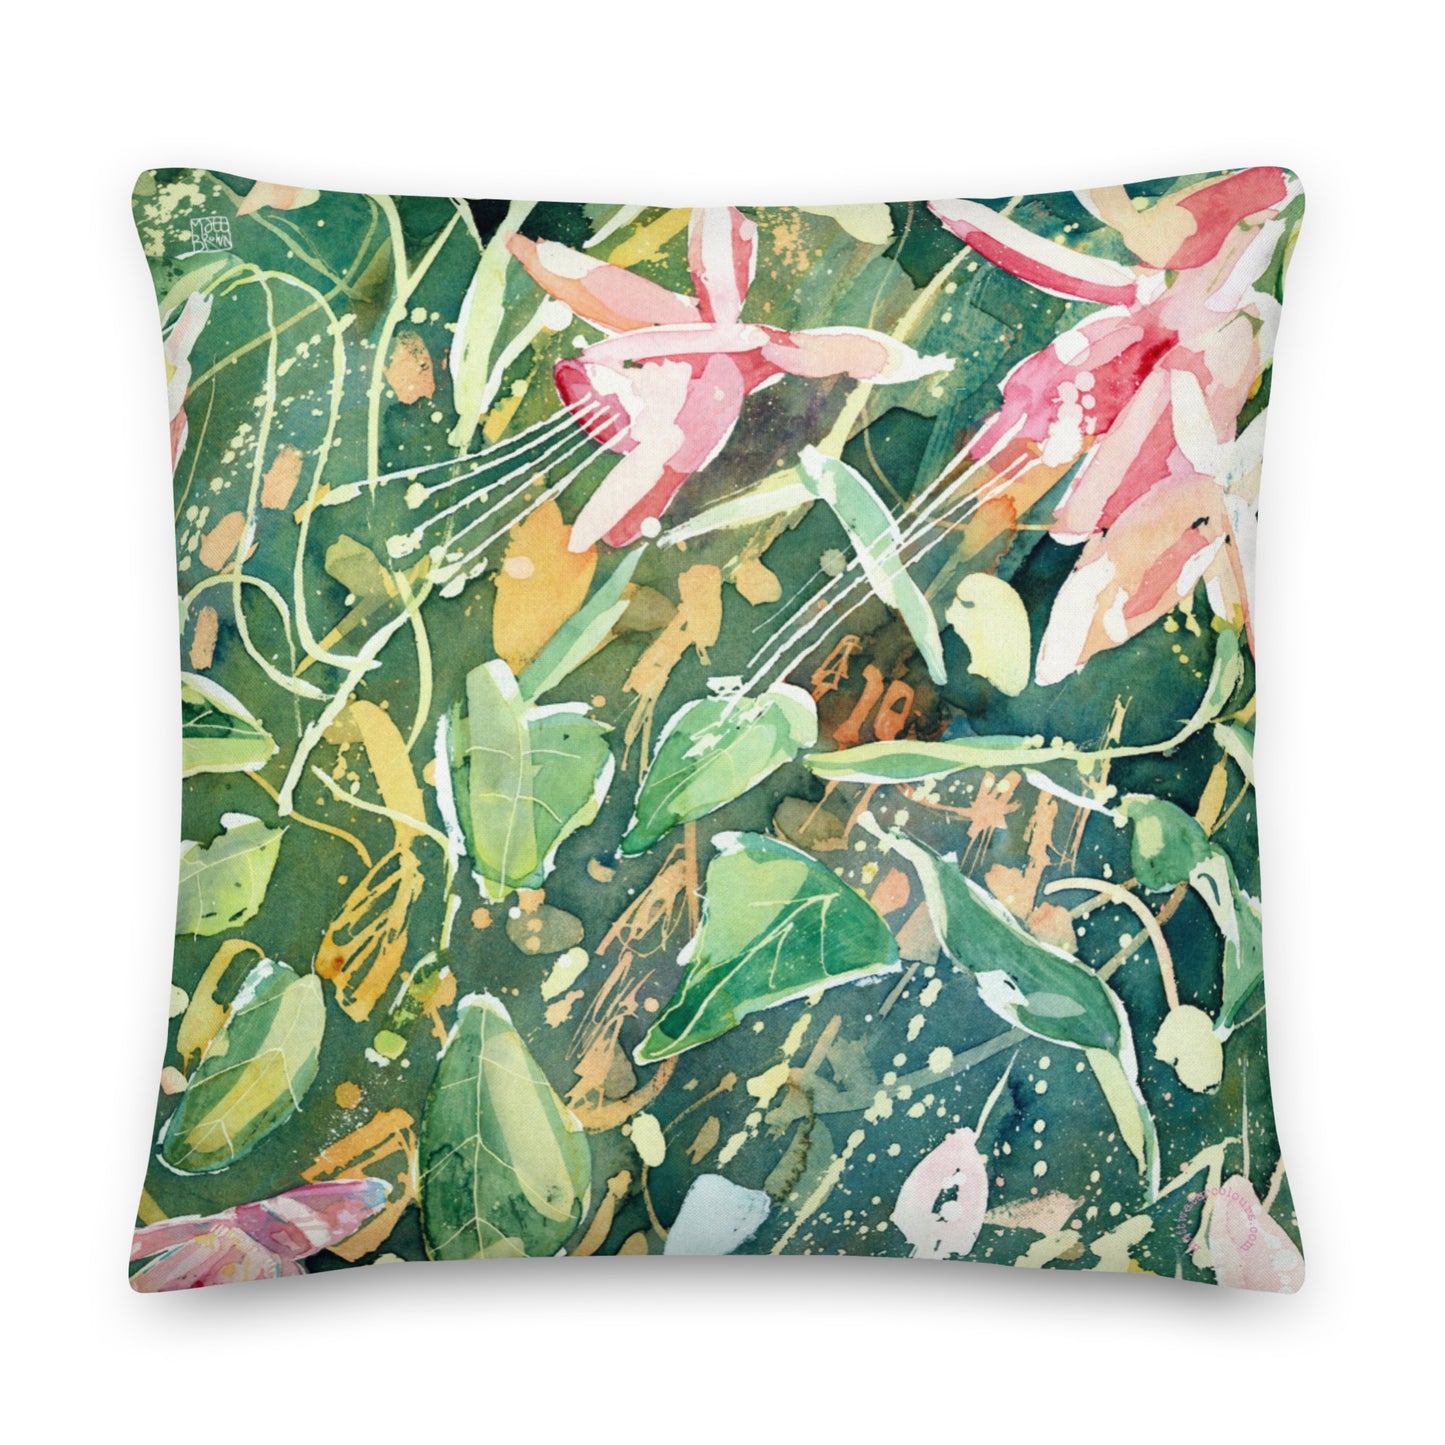 Large Luxury Art Print Cushion - Moment of Flowers (56cm x 56cm)